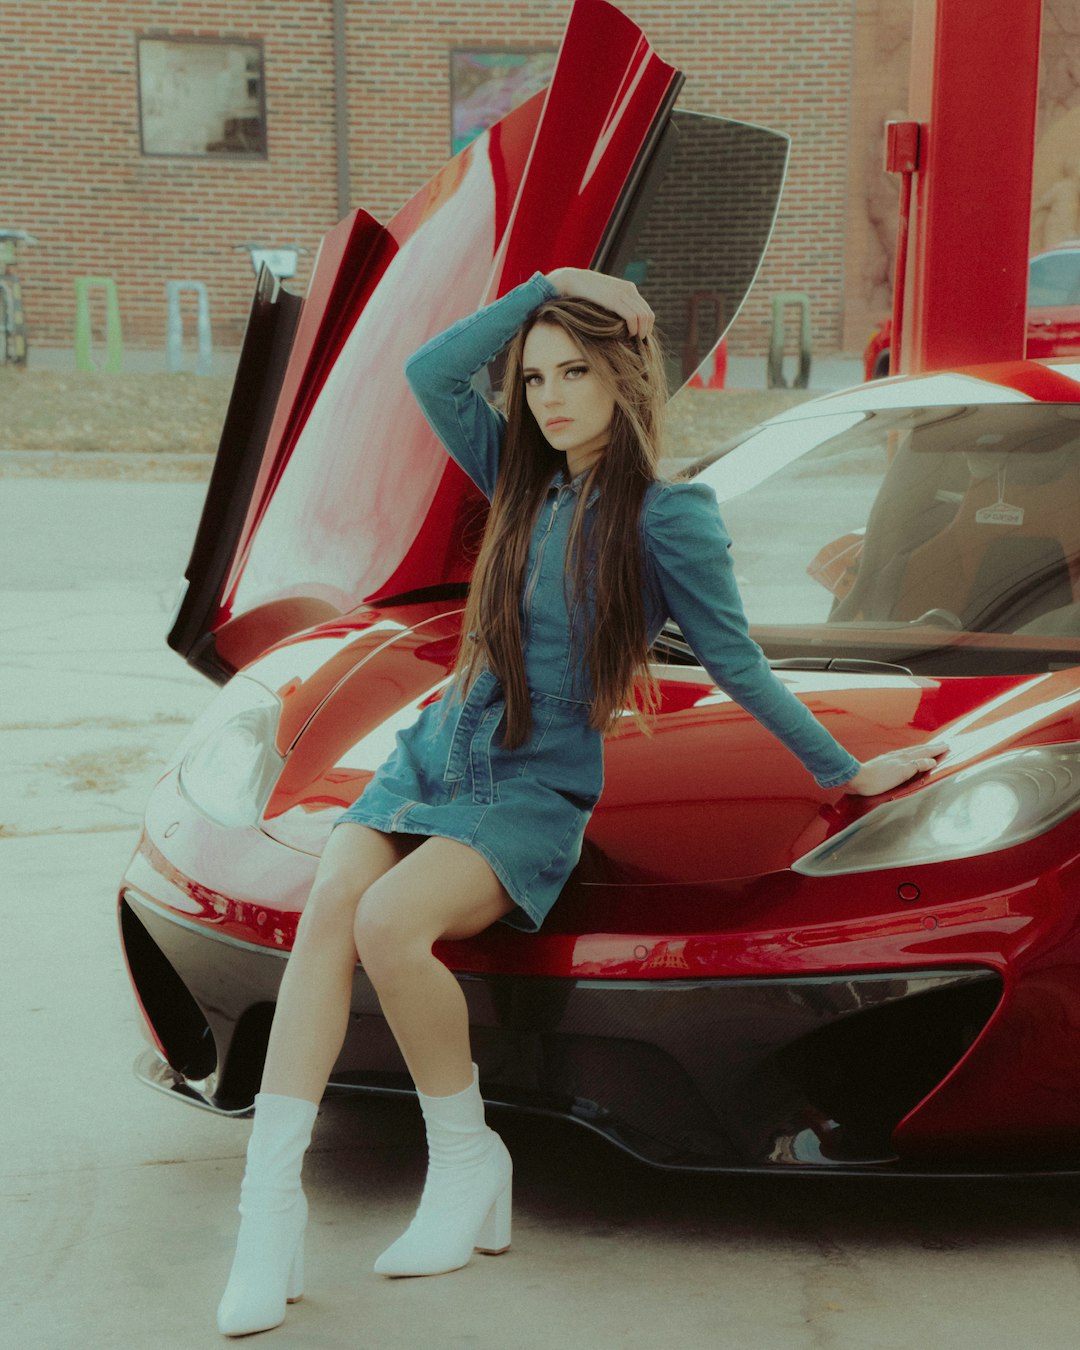 Girl posing next to a McLaren
instagram: @liferondeau
model: @kaleamorgan_